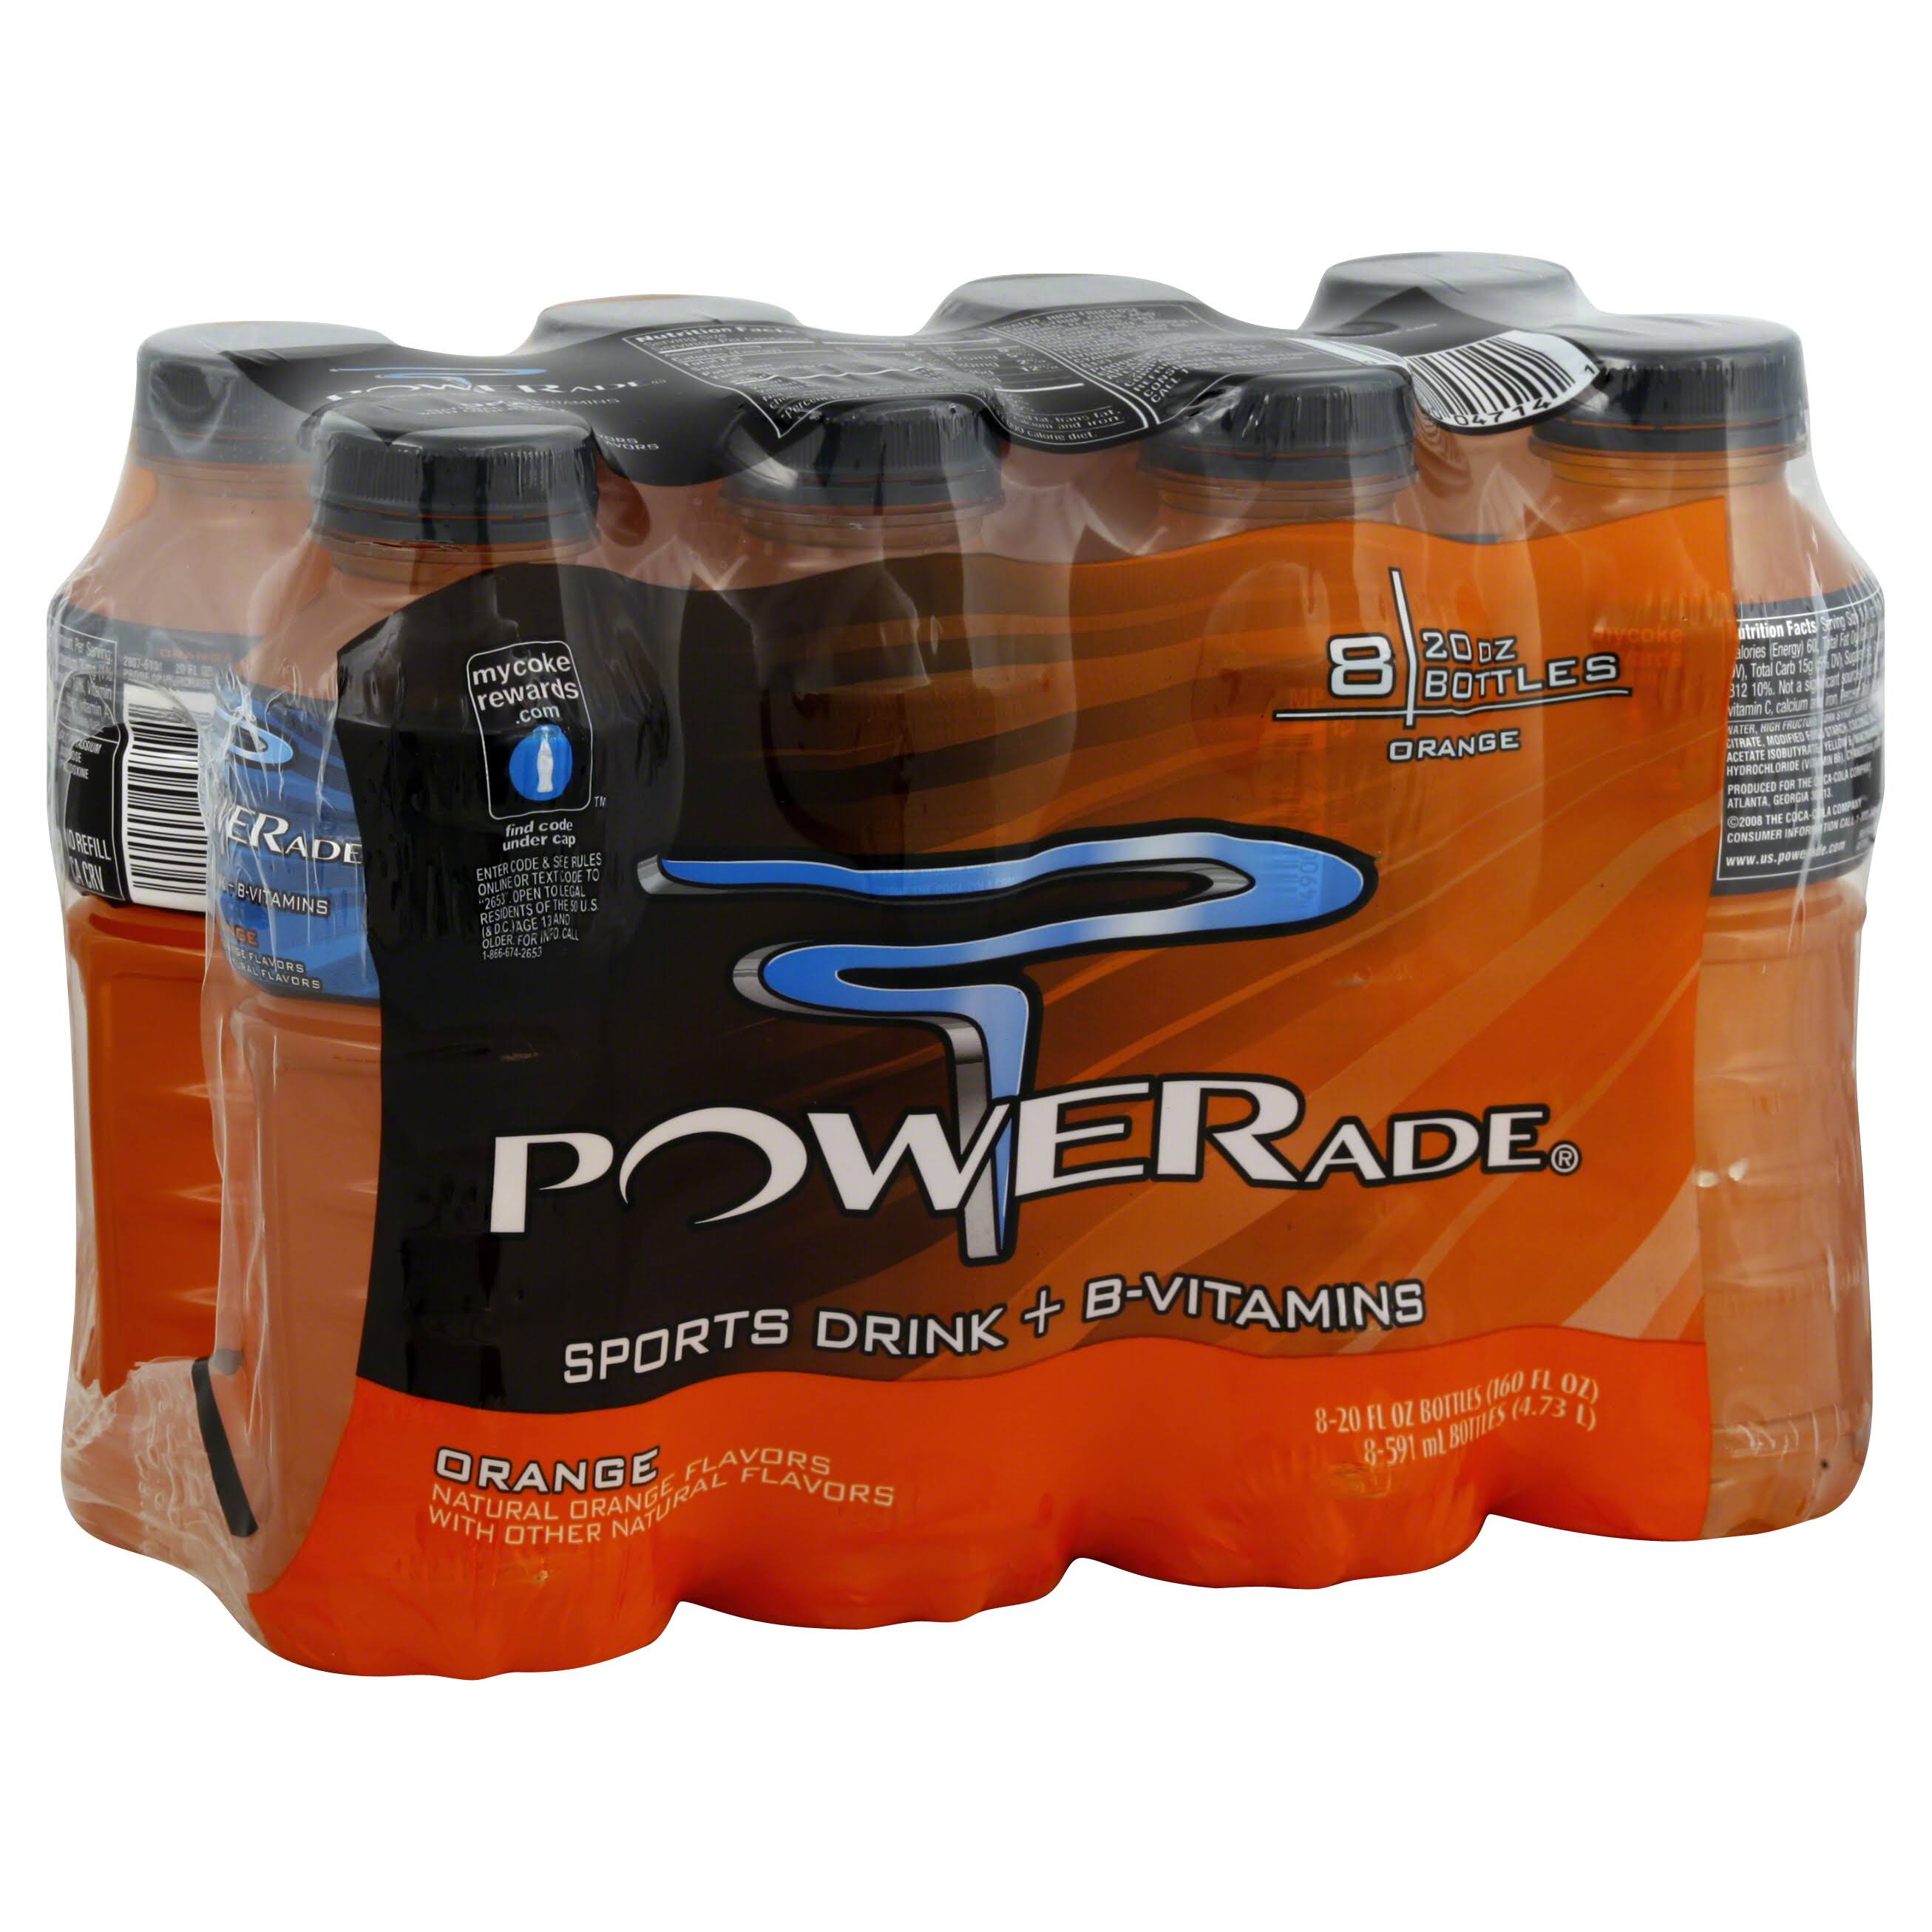 Powerade Sports Drink + B Vitamins, Orange - 8 pack, 20 fl oz bottles